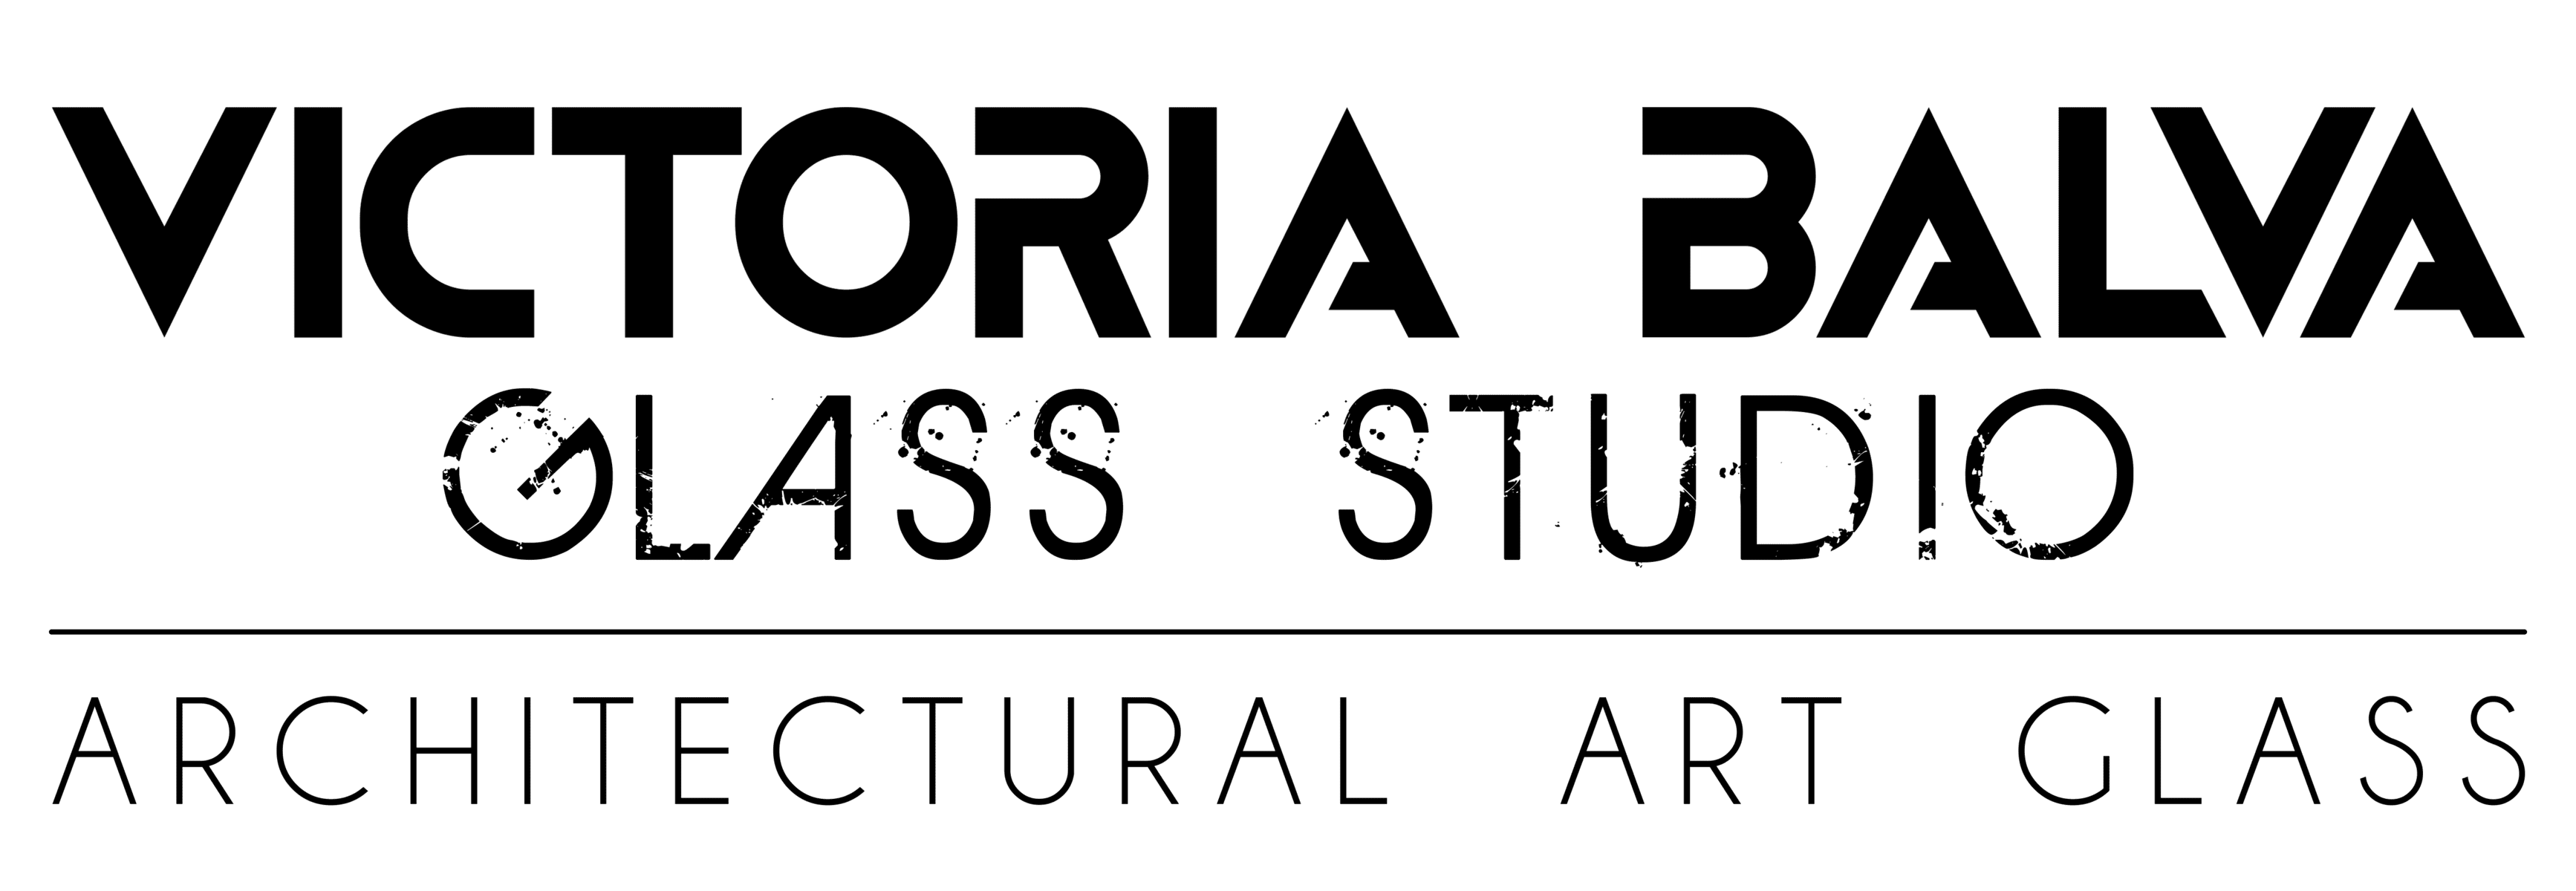 Victoria Balva Glass Studio - Architectural Art Glass